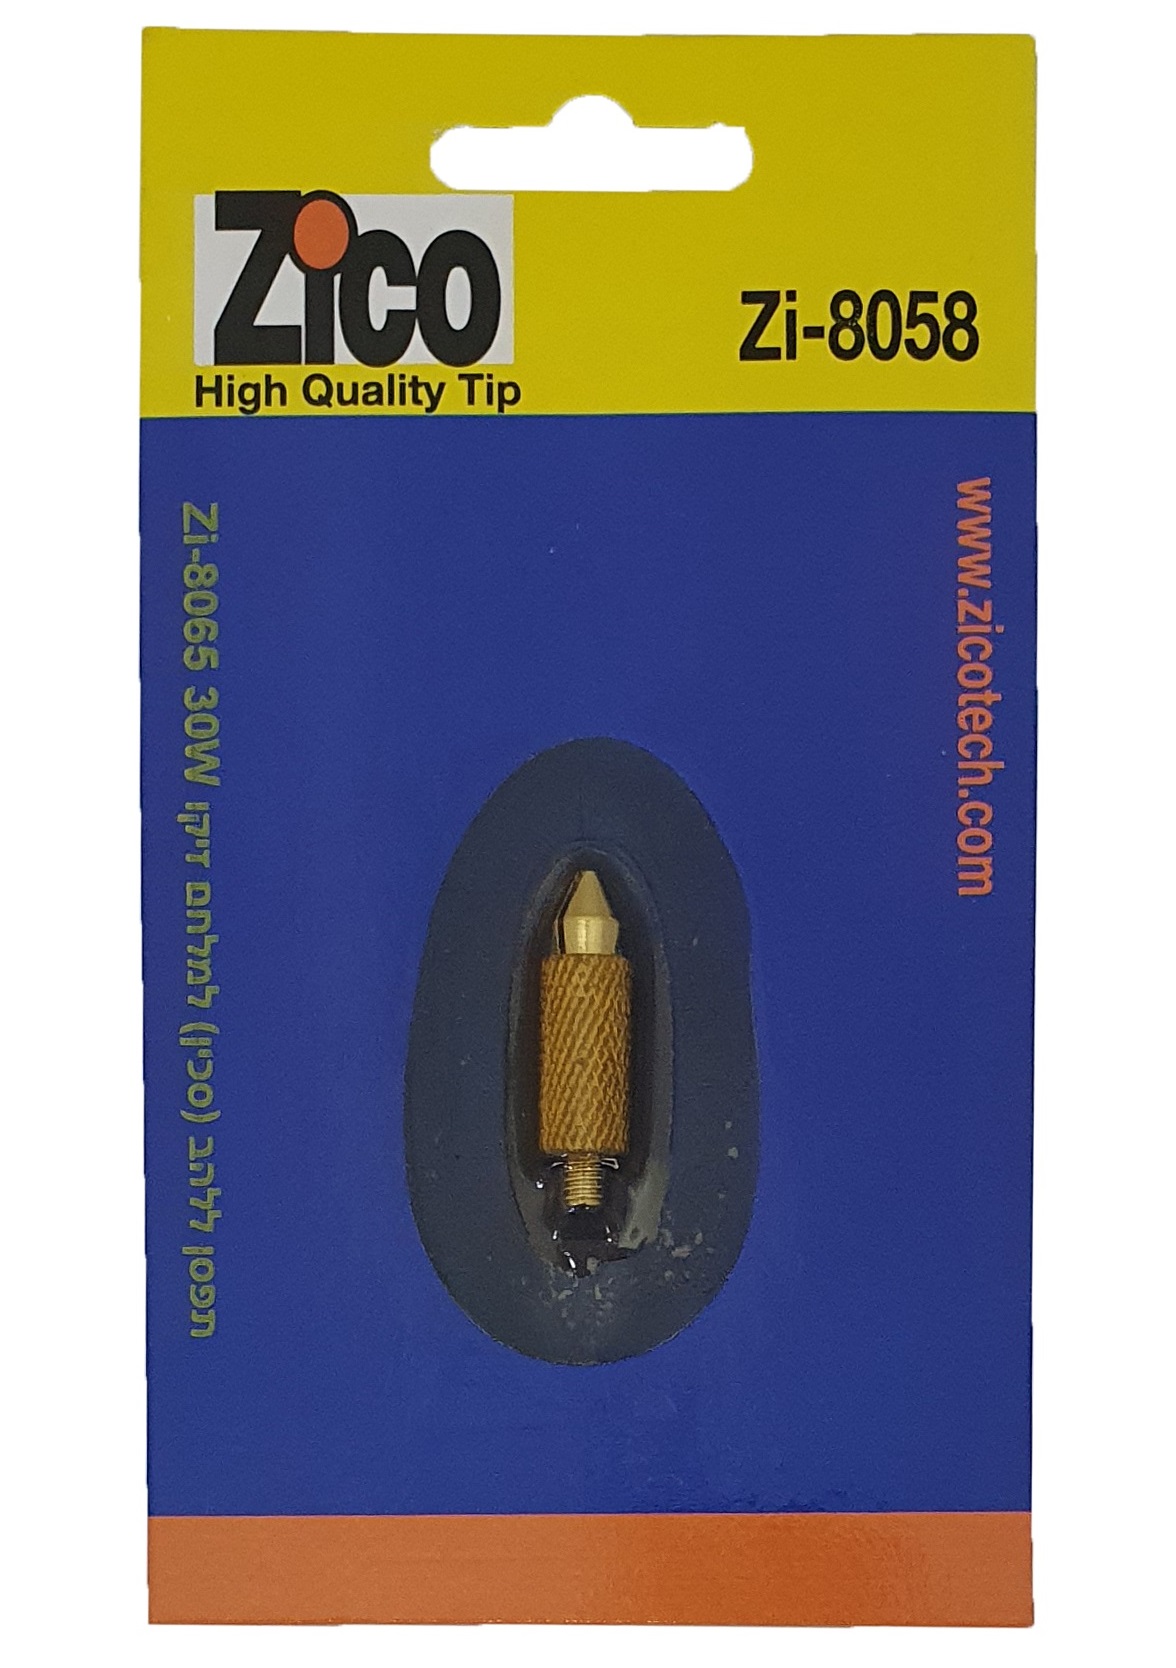     ZI-8058